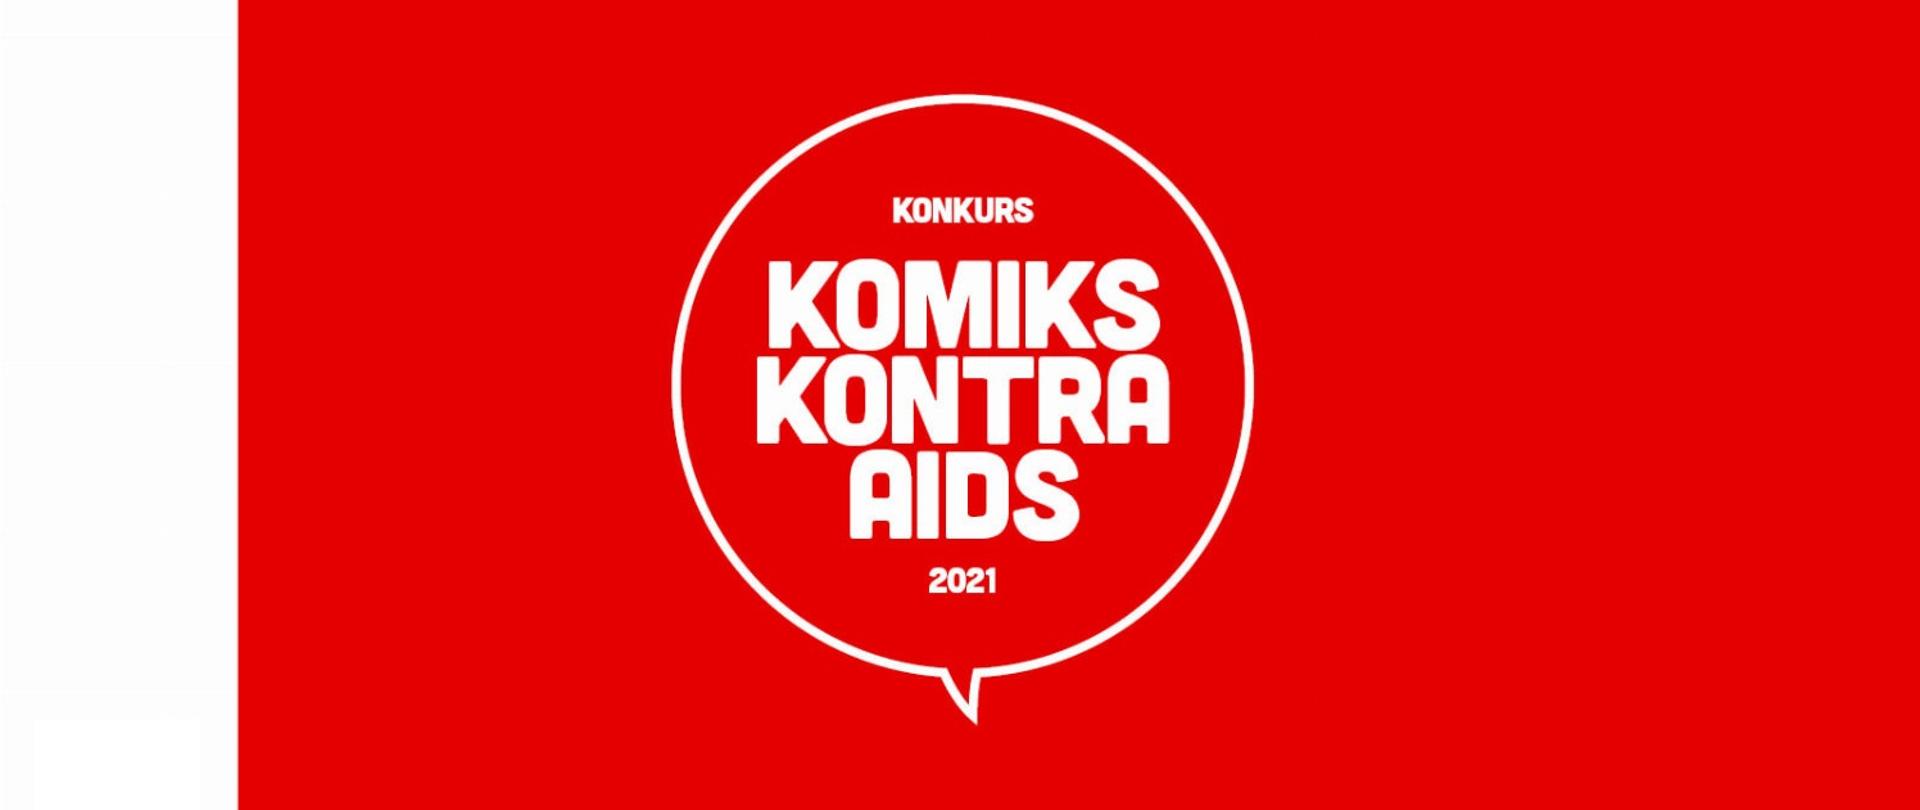 Konkurs komiks kontra AIDS - 2021